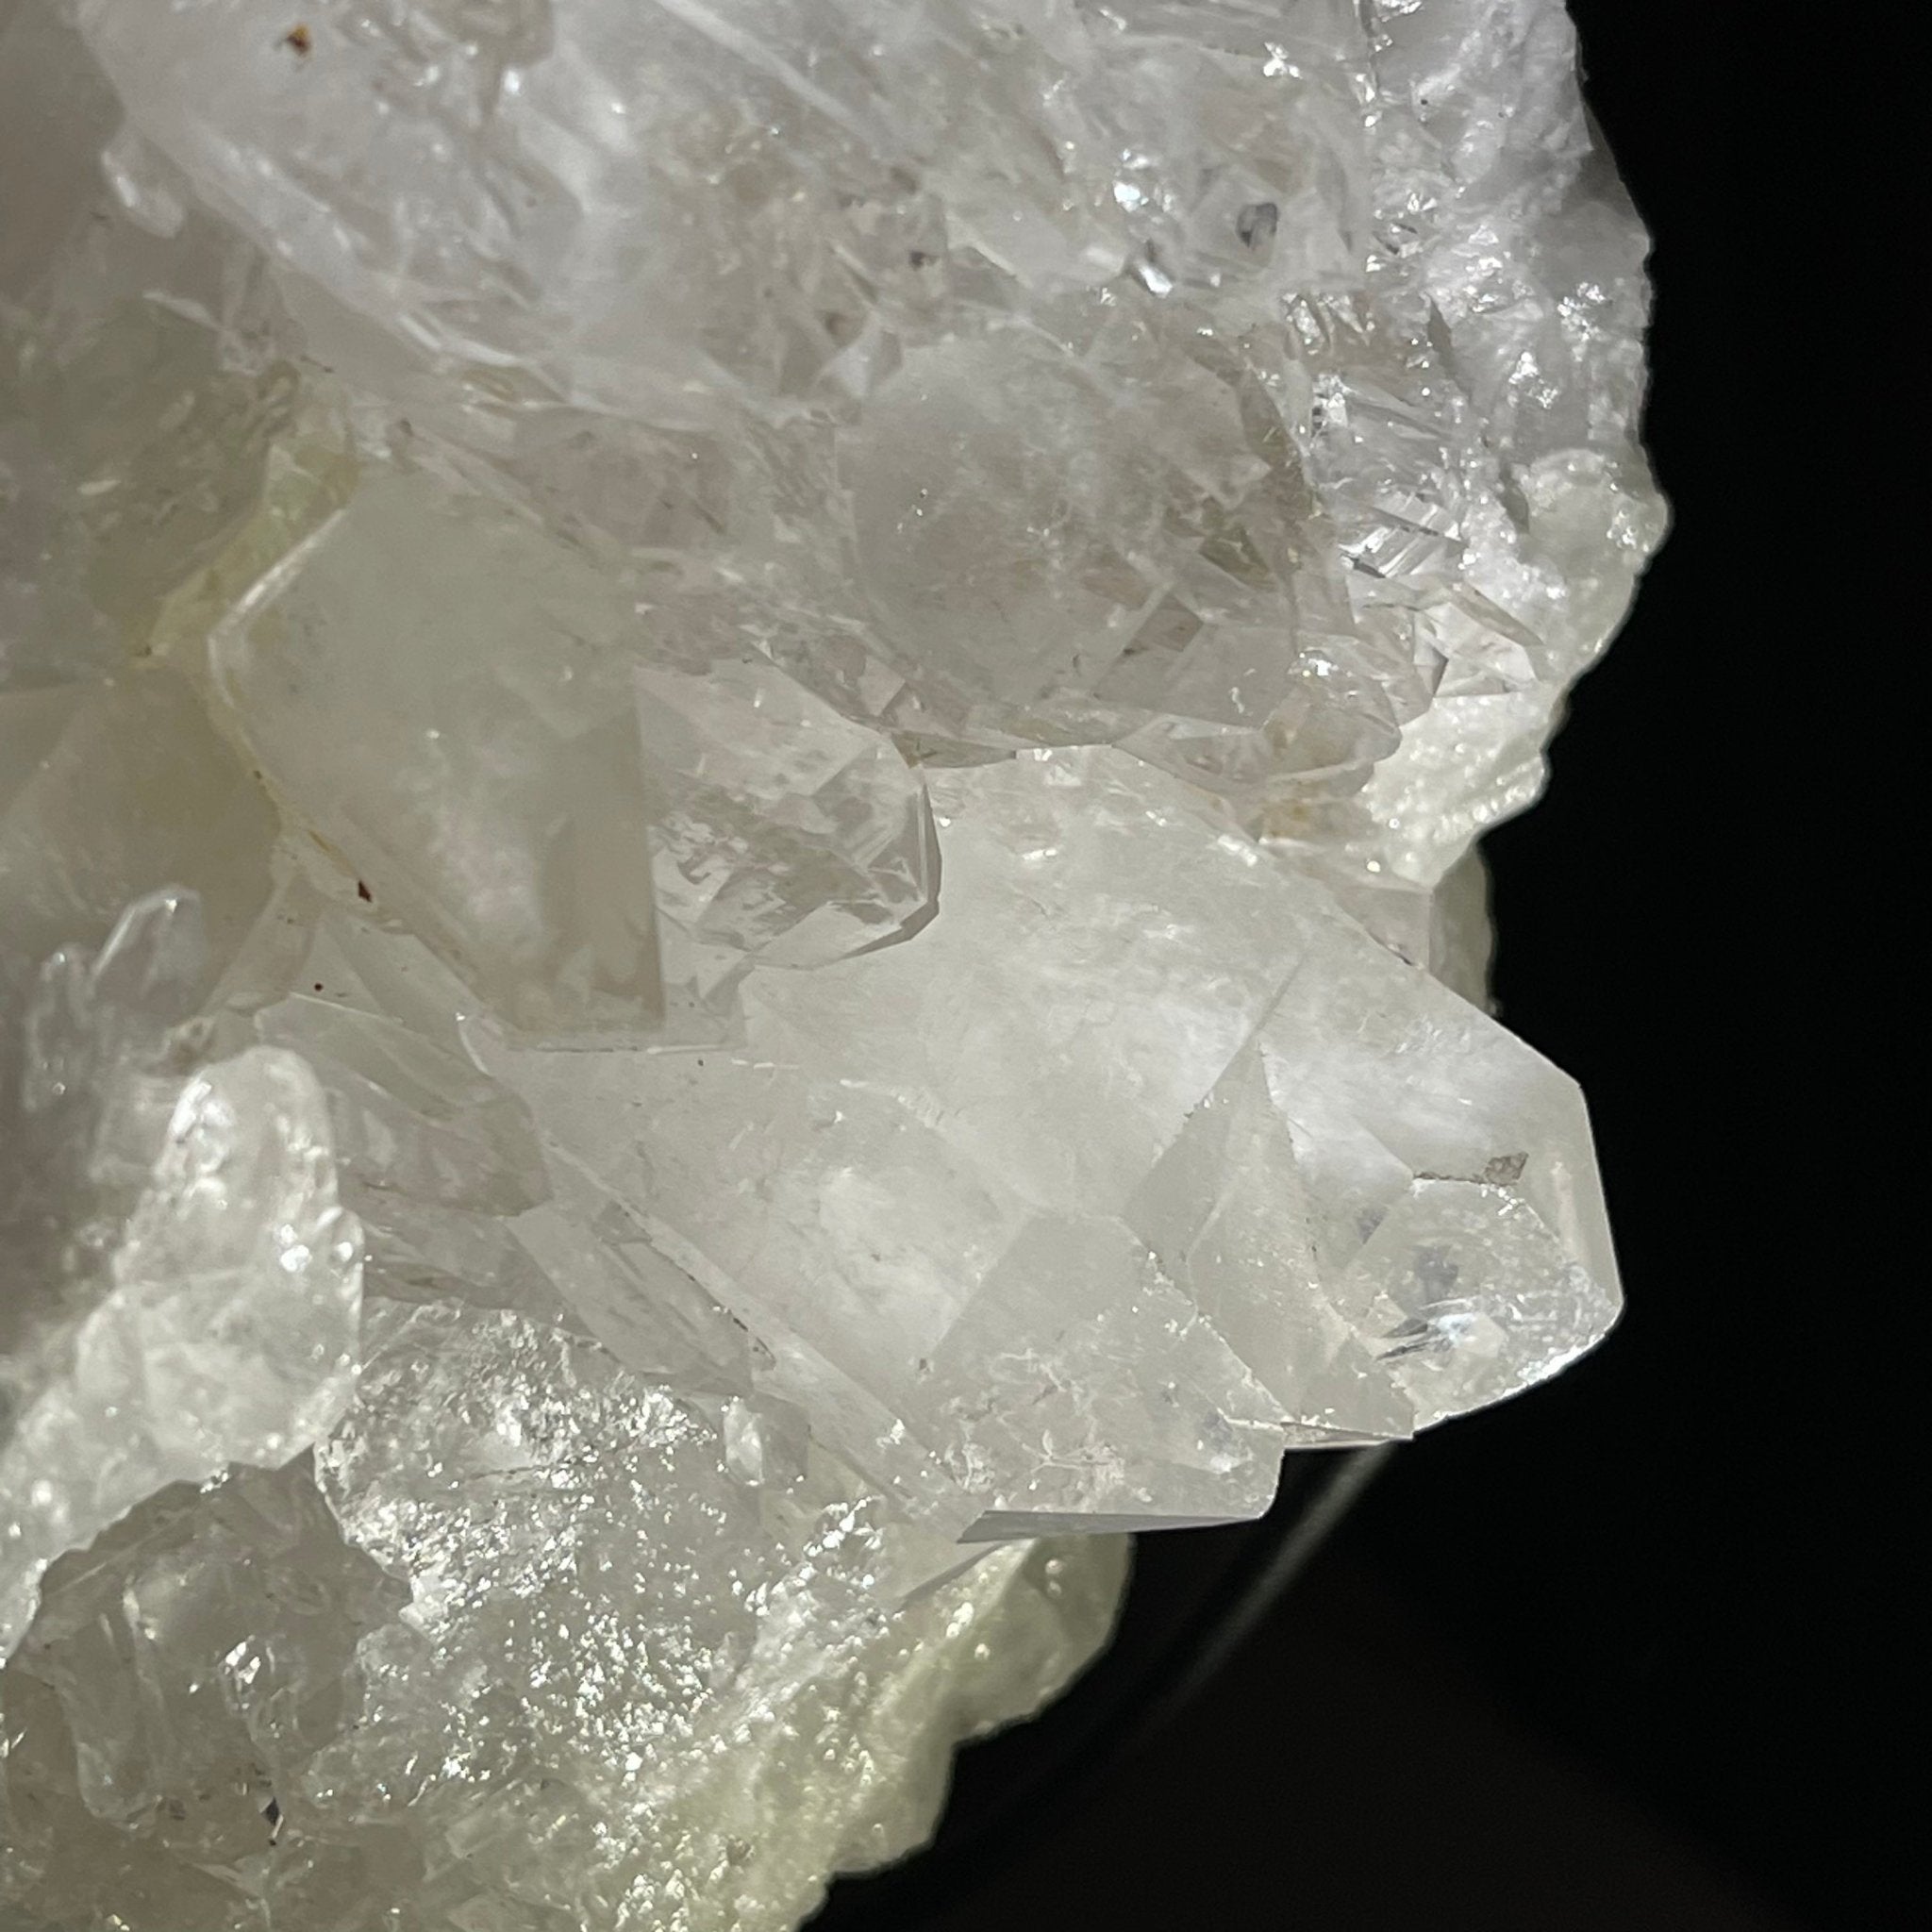 Brazilian Clear Quartz Crystal Cluster, metal base, 18.9 lbs & 15.25" Tall Model #5495-0071 by Brazil Gems - Brazil GemsBrazil GemsBrazilian Clear Quartz Crystal Cluster, metal base, 18.9 lbs & 15.25" Tall Model #5495-0071 by Brazil GemsClusters on Fixed Bases5495-0071